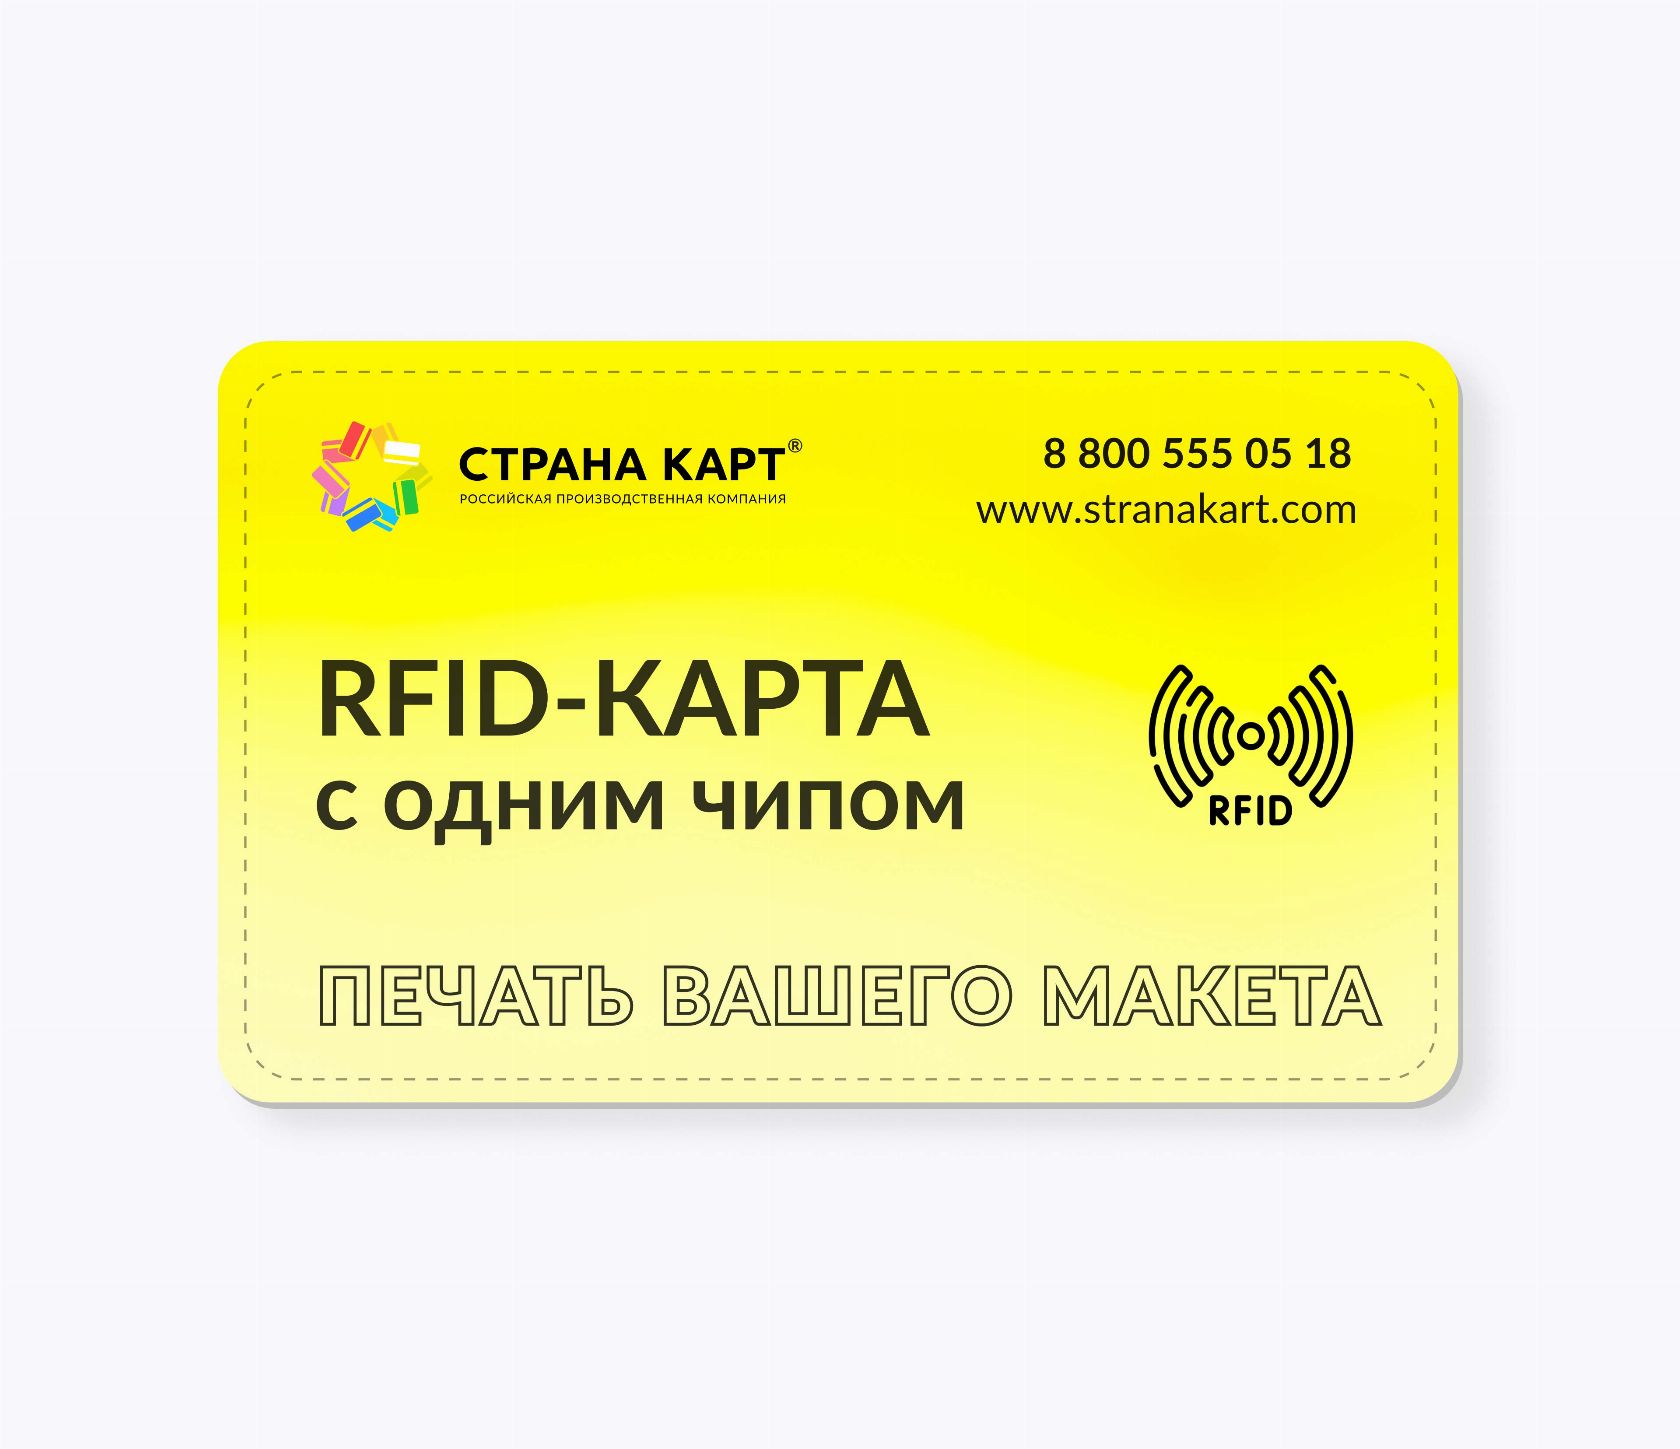 RFID-карты с чипом NXP MIFARE Classic EV1 1k 7 byte nUID печать вашего макета RFID-карты с чипом NXP MIFARE Classic EV1 1k 7 byte nUID